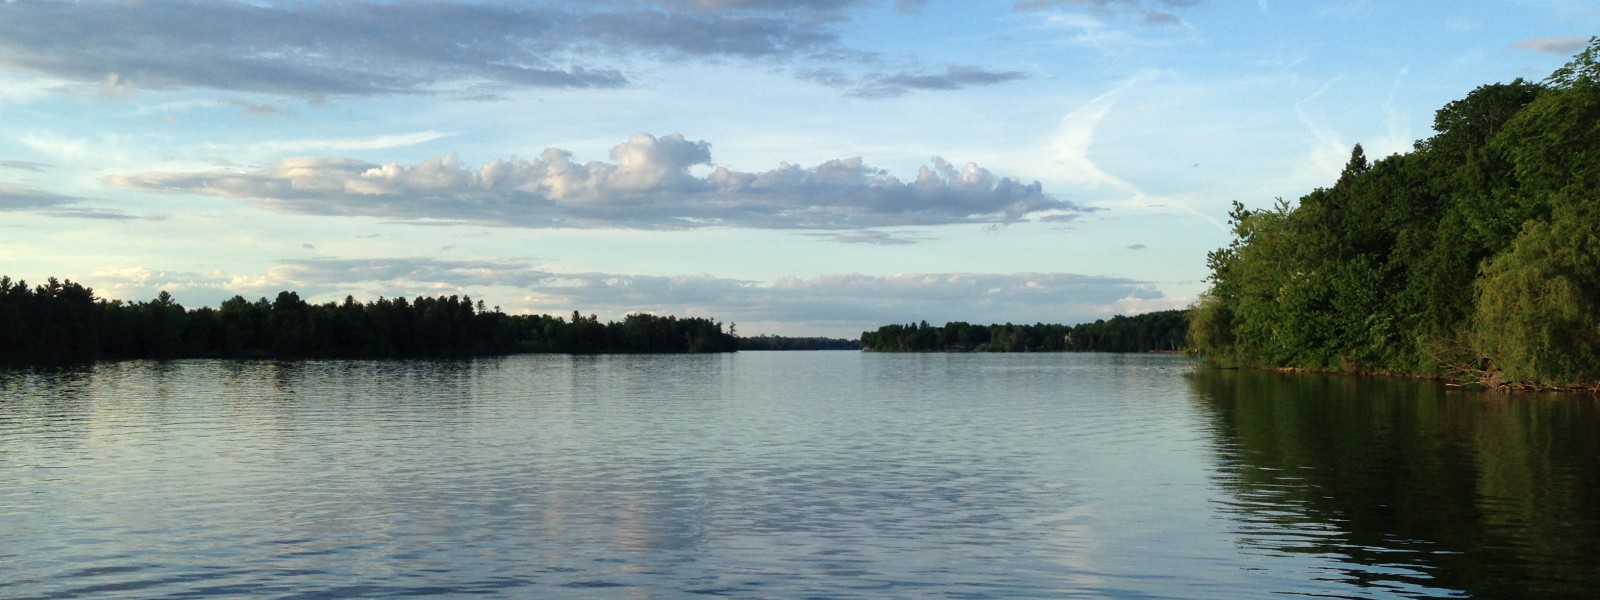 Loughborough Lake in Ontario, Canada